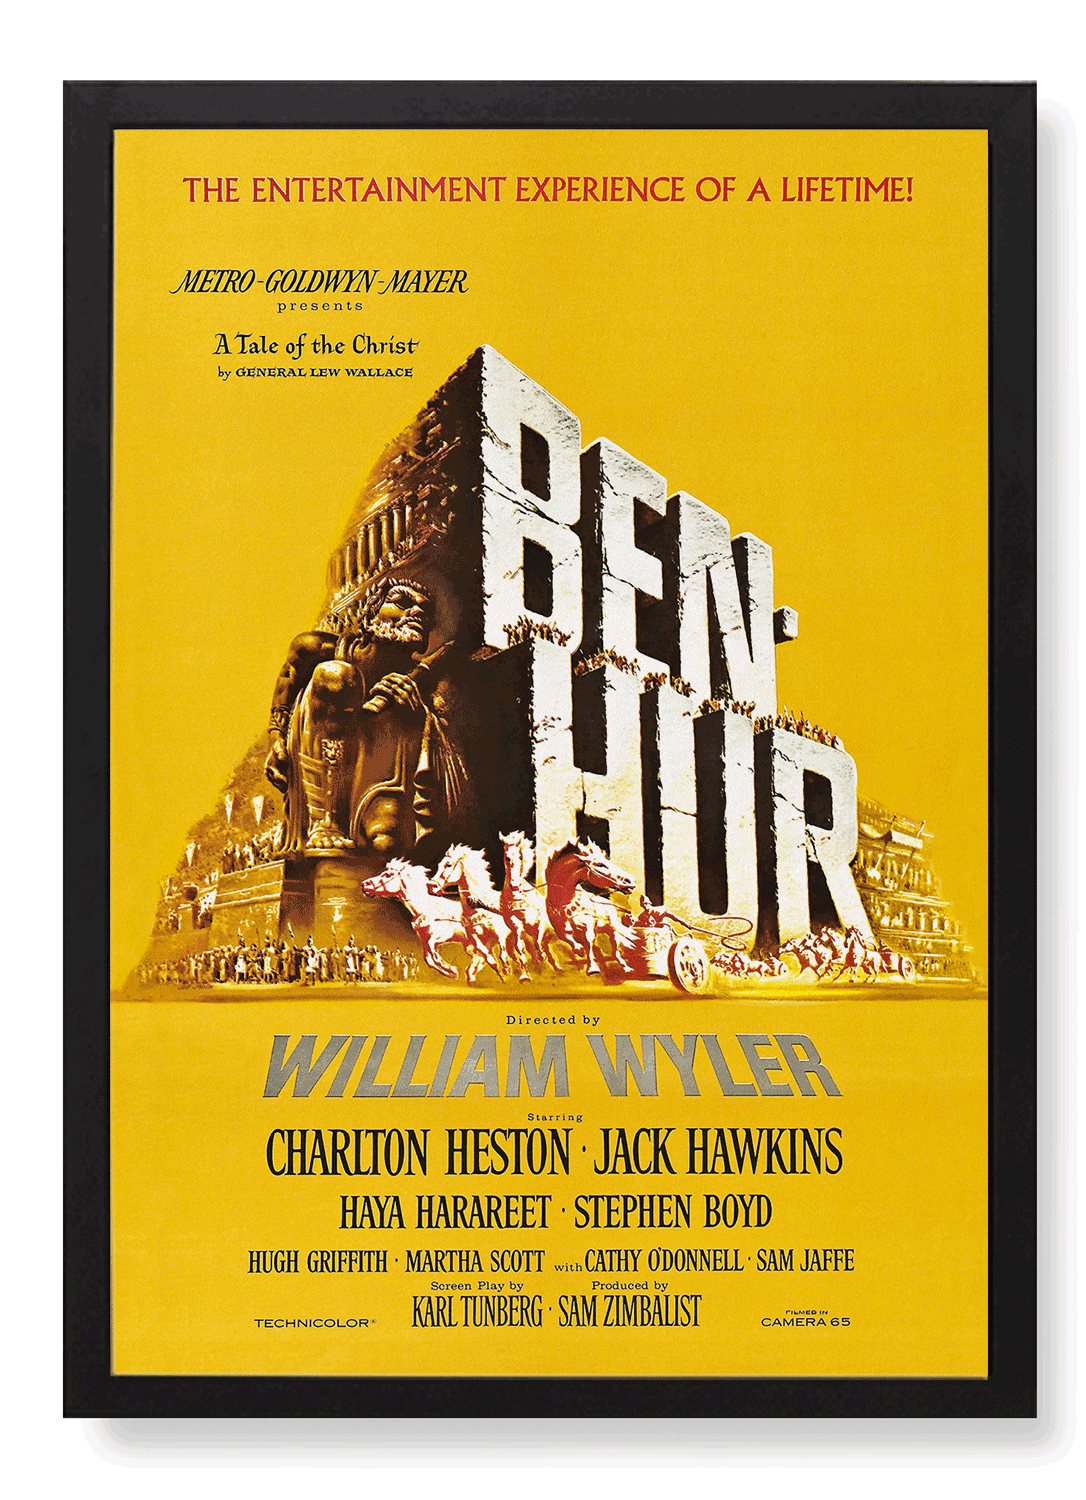 BEN-HUR (1959)